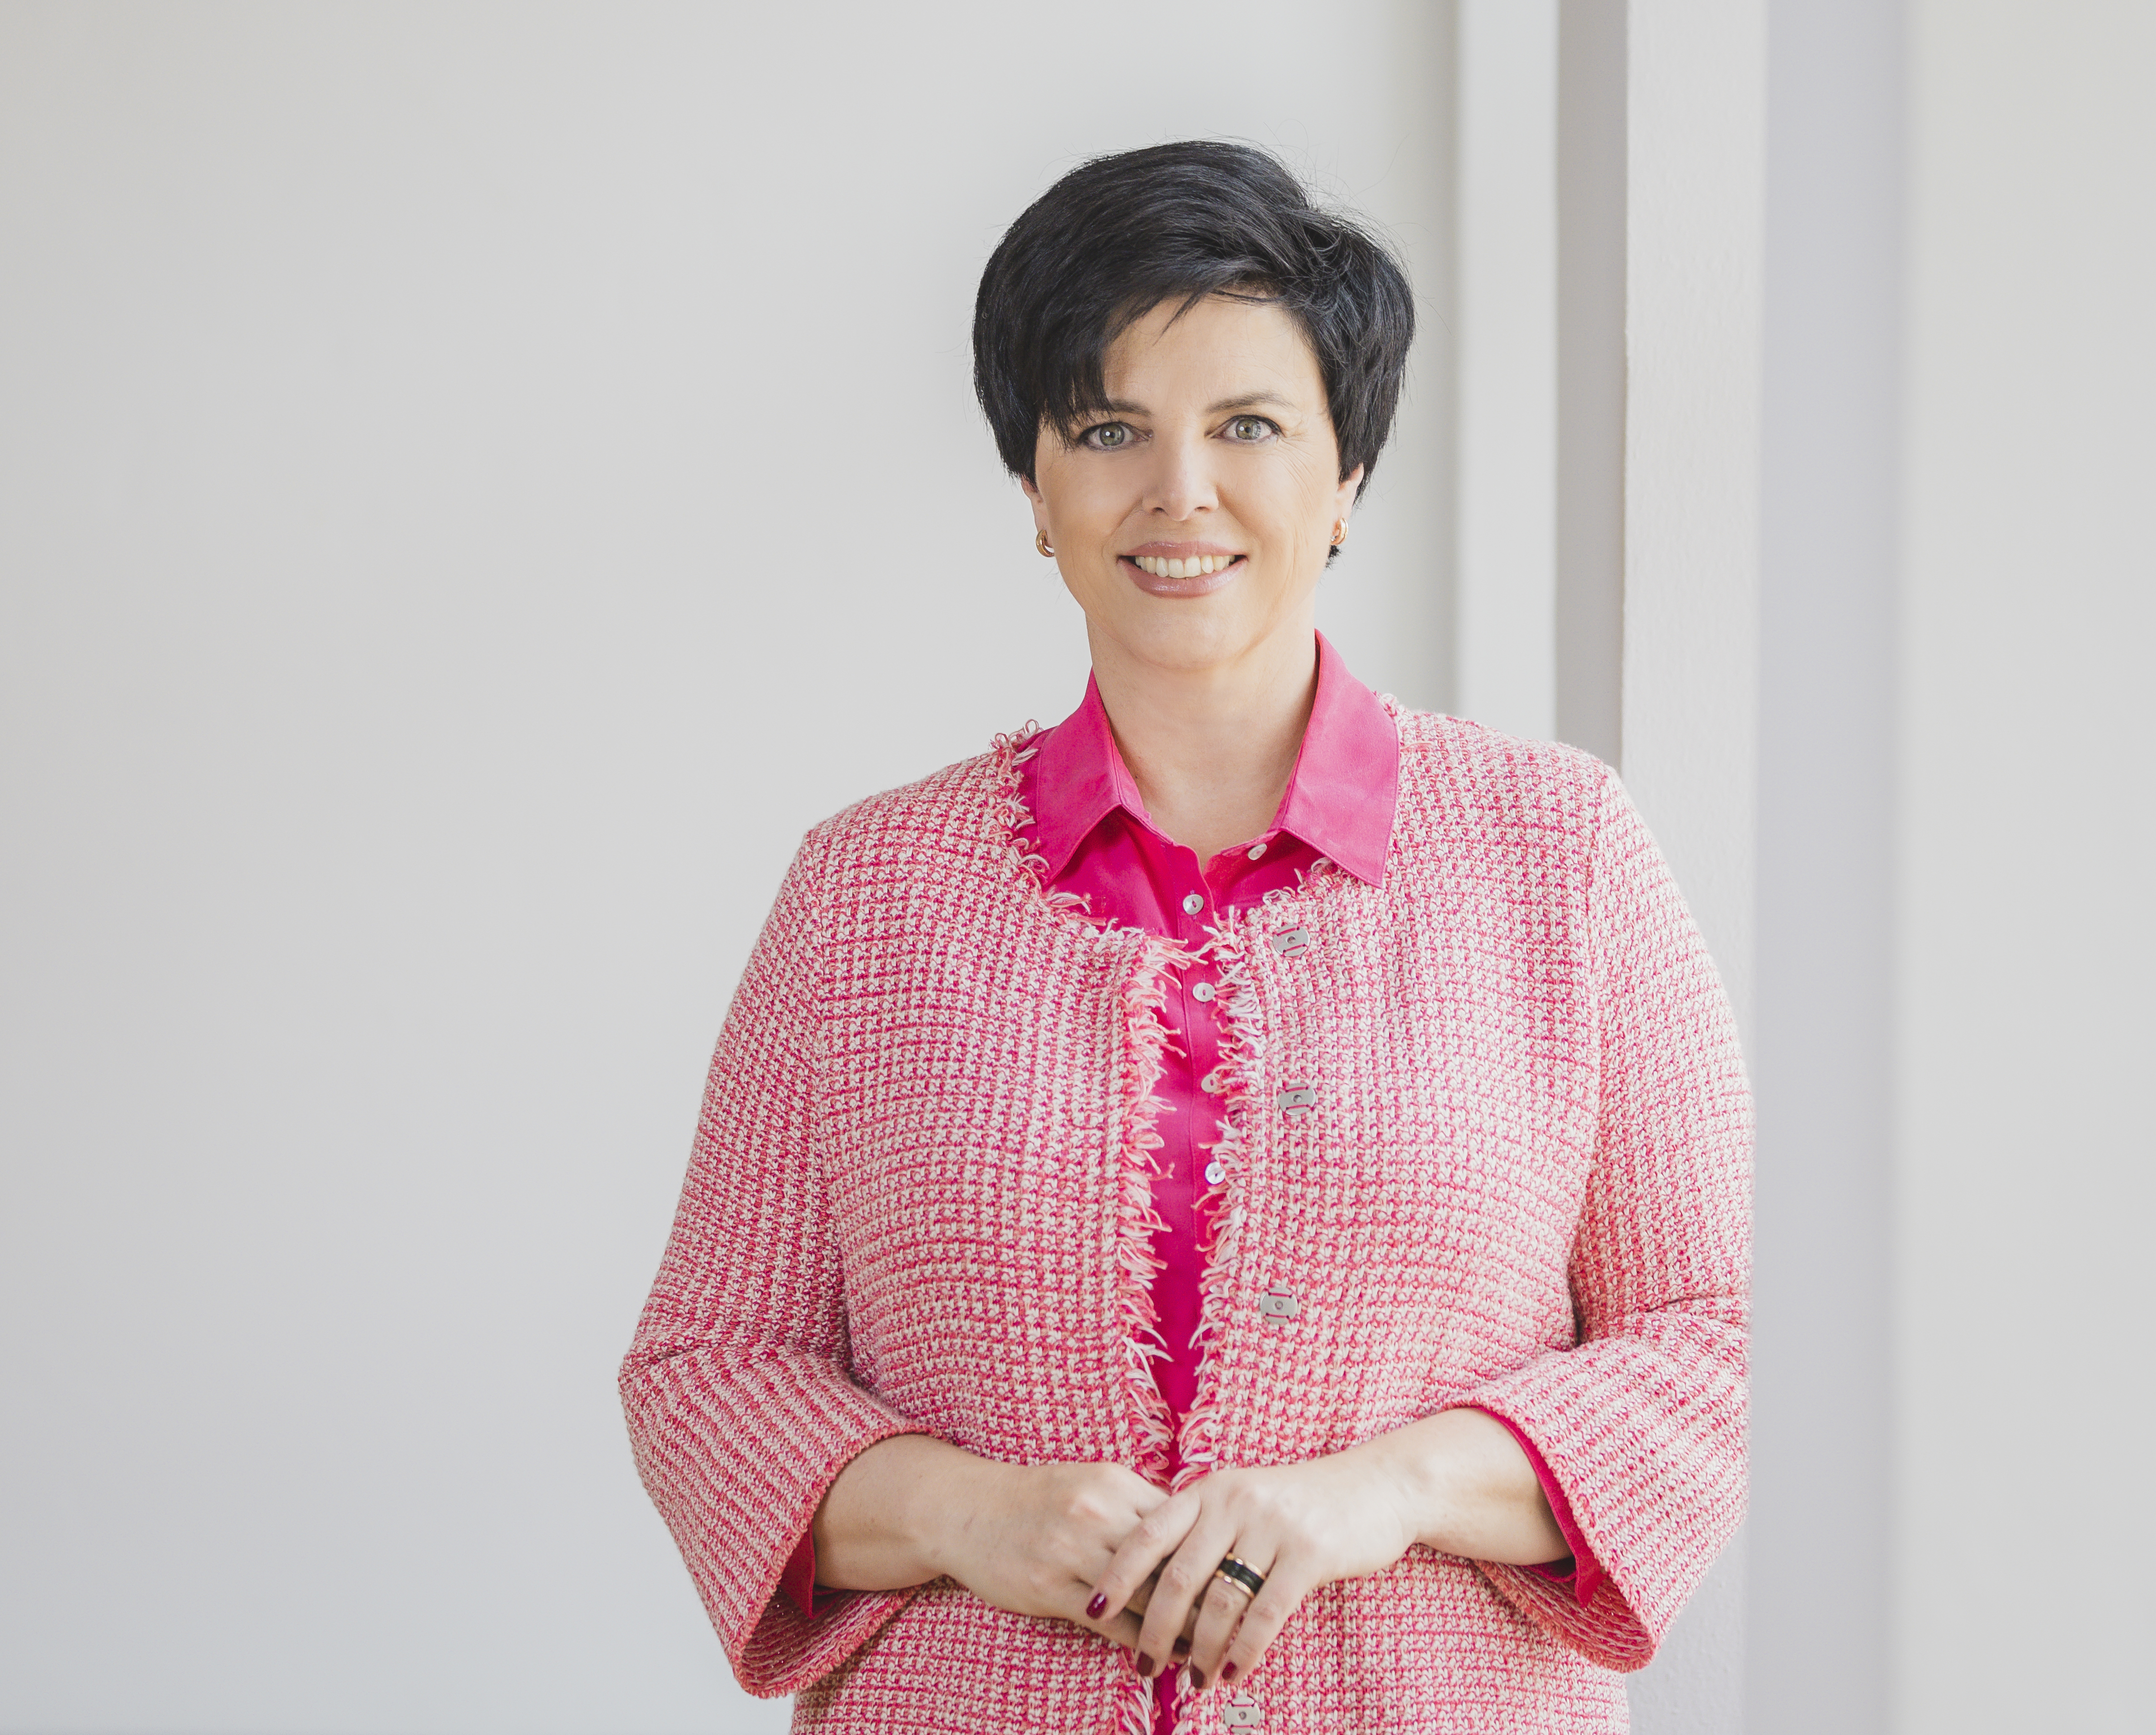 Karin Seiler, CEO of Tirol Werbung